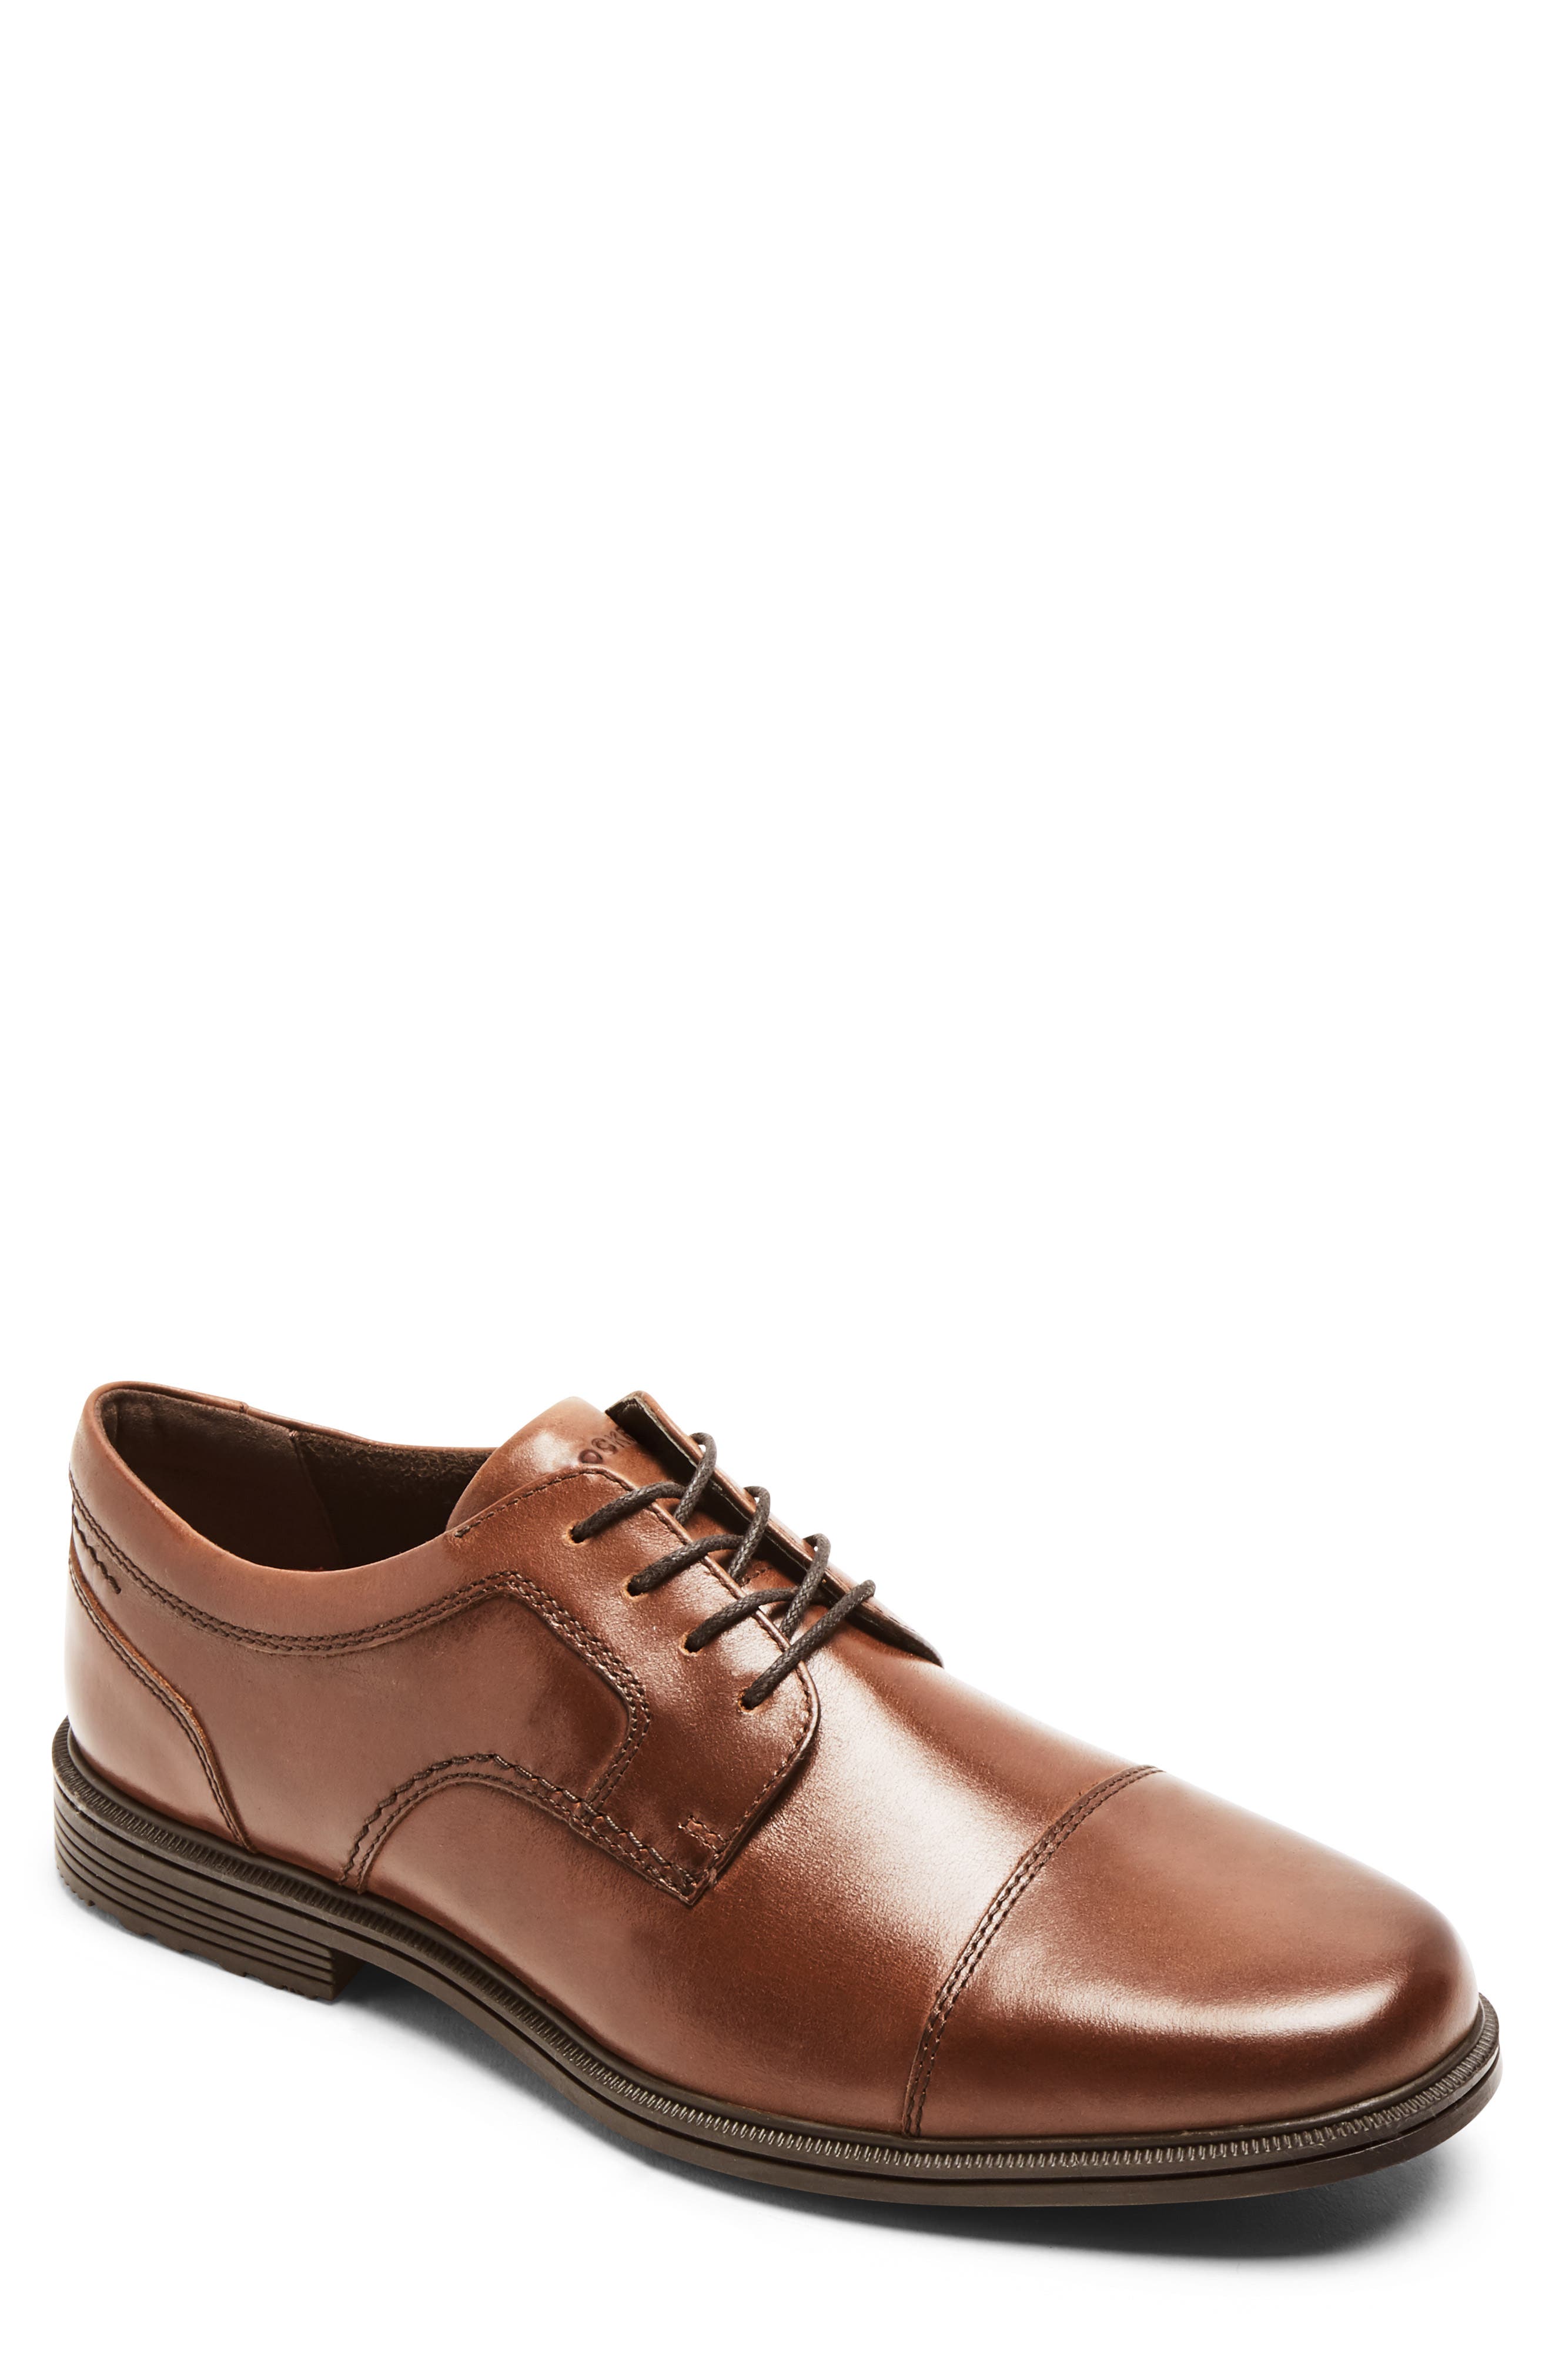 Rockport Men's Black or Brown Impedor Oxford Shoes NIB